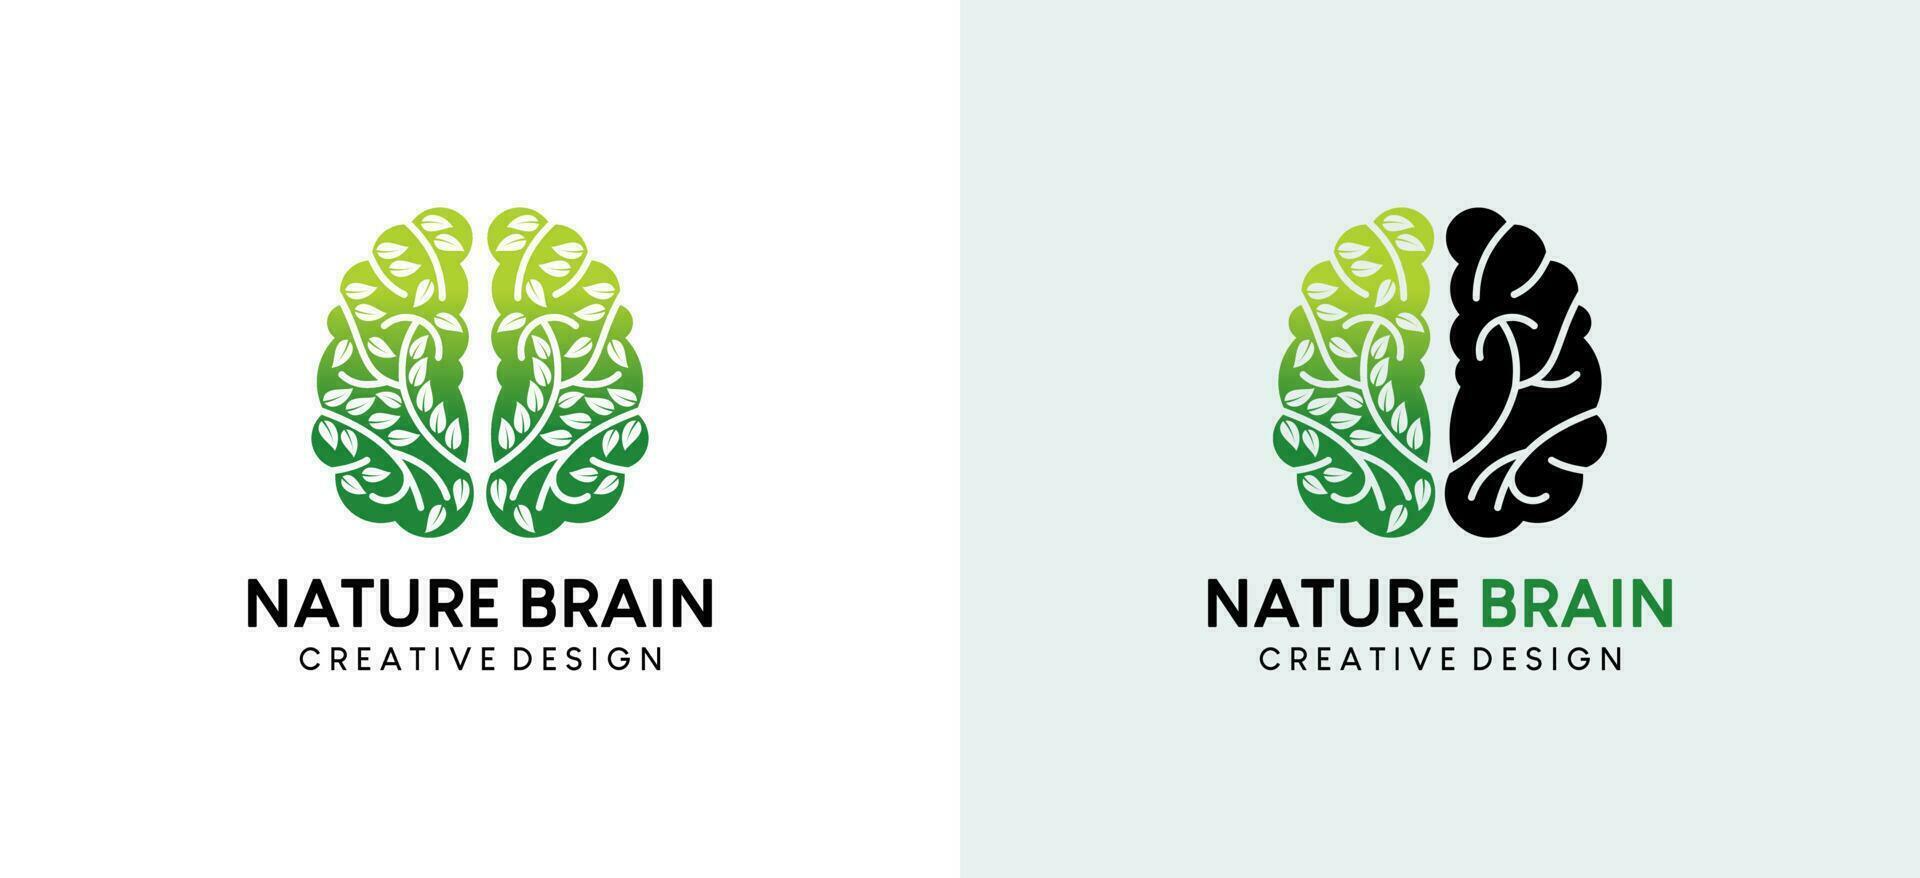 Nature brain logo design, creative abstract leaf and brain logo vector illustration